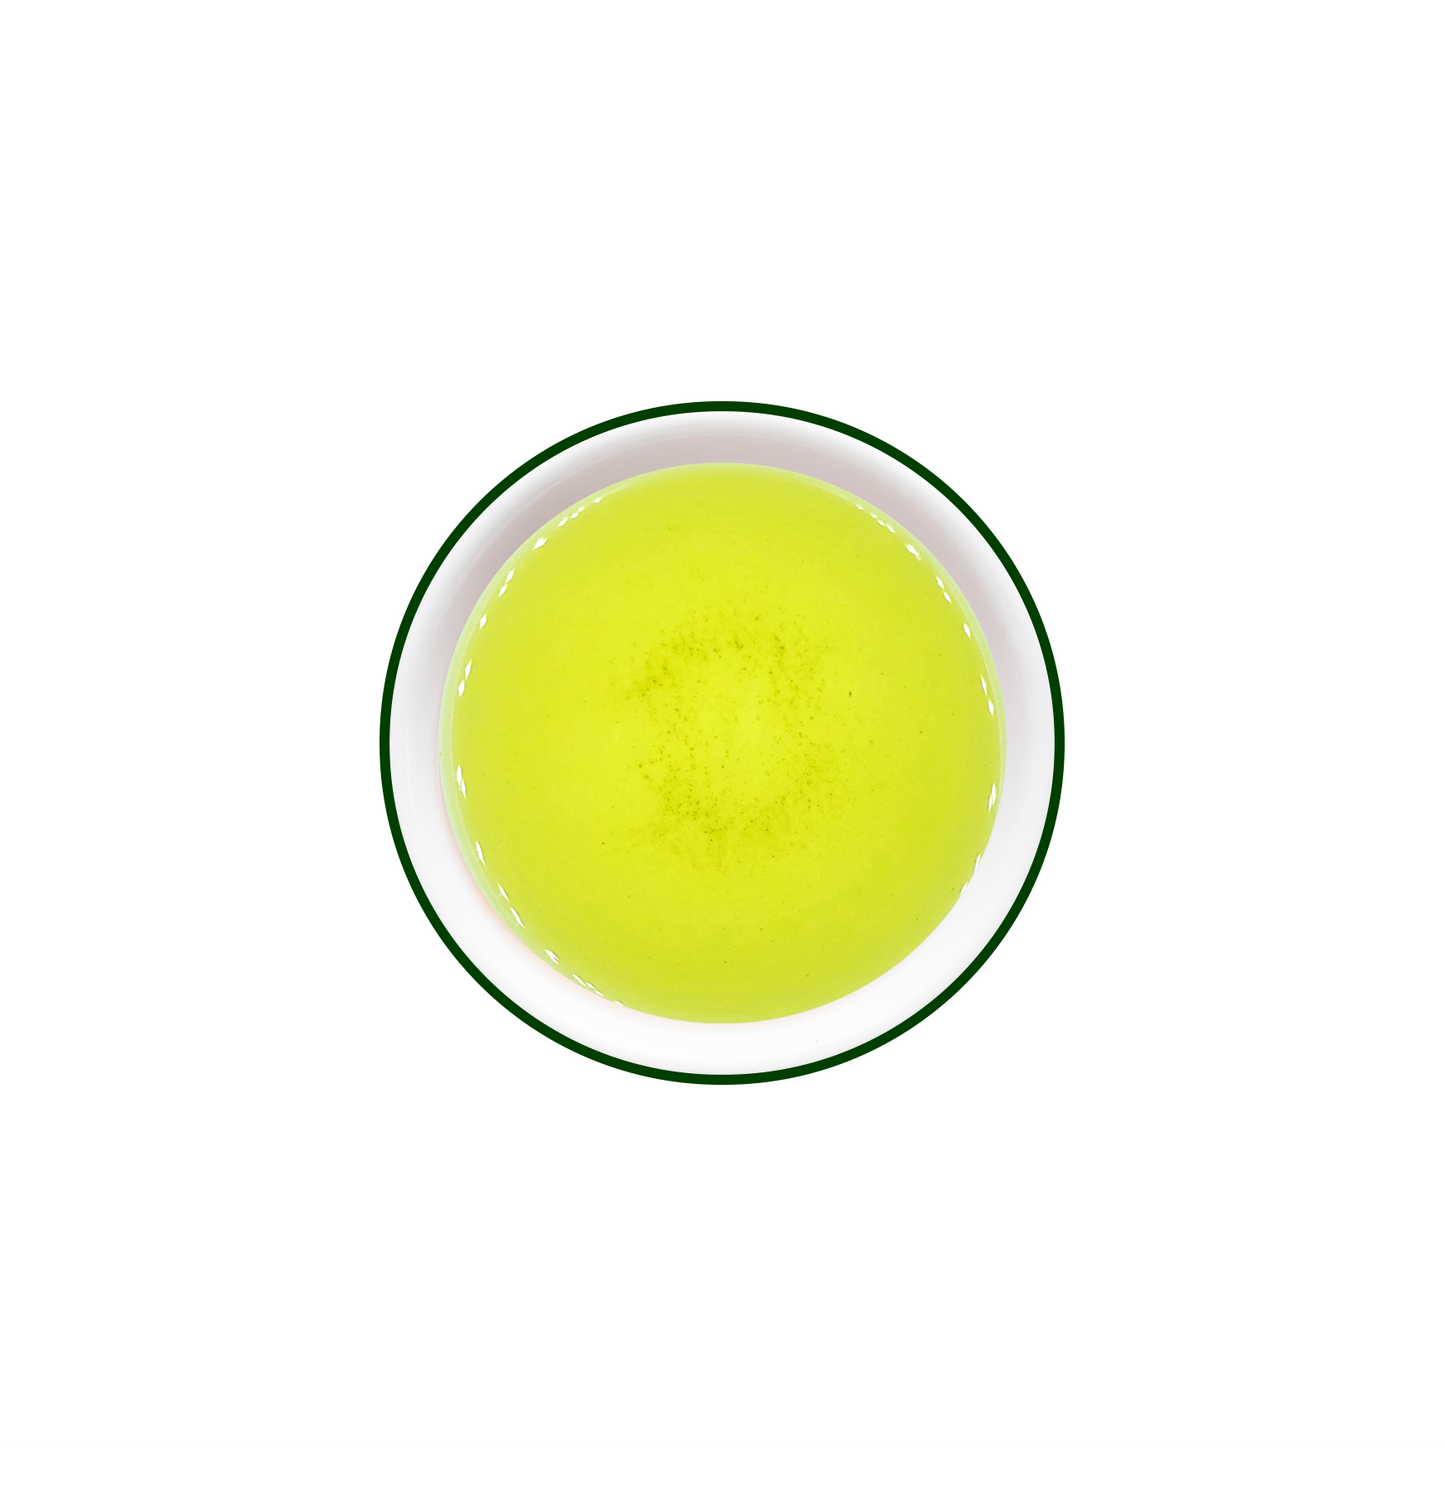 Nateavia Bancha - Organic  Japanese Loose Leaf Green Tea - Light Taste - Authentic Japanese Origin, from Kagoshima - 1Kg